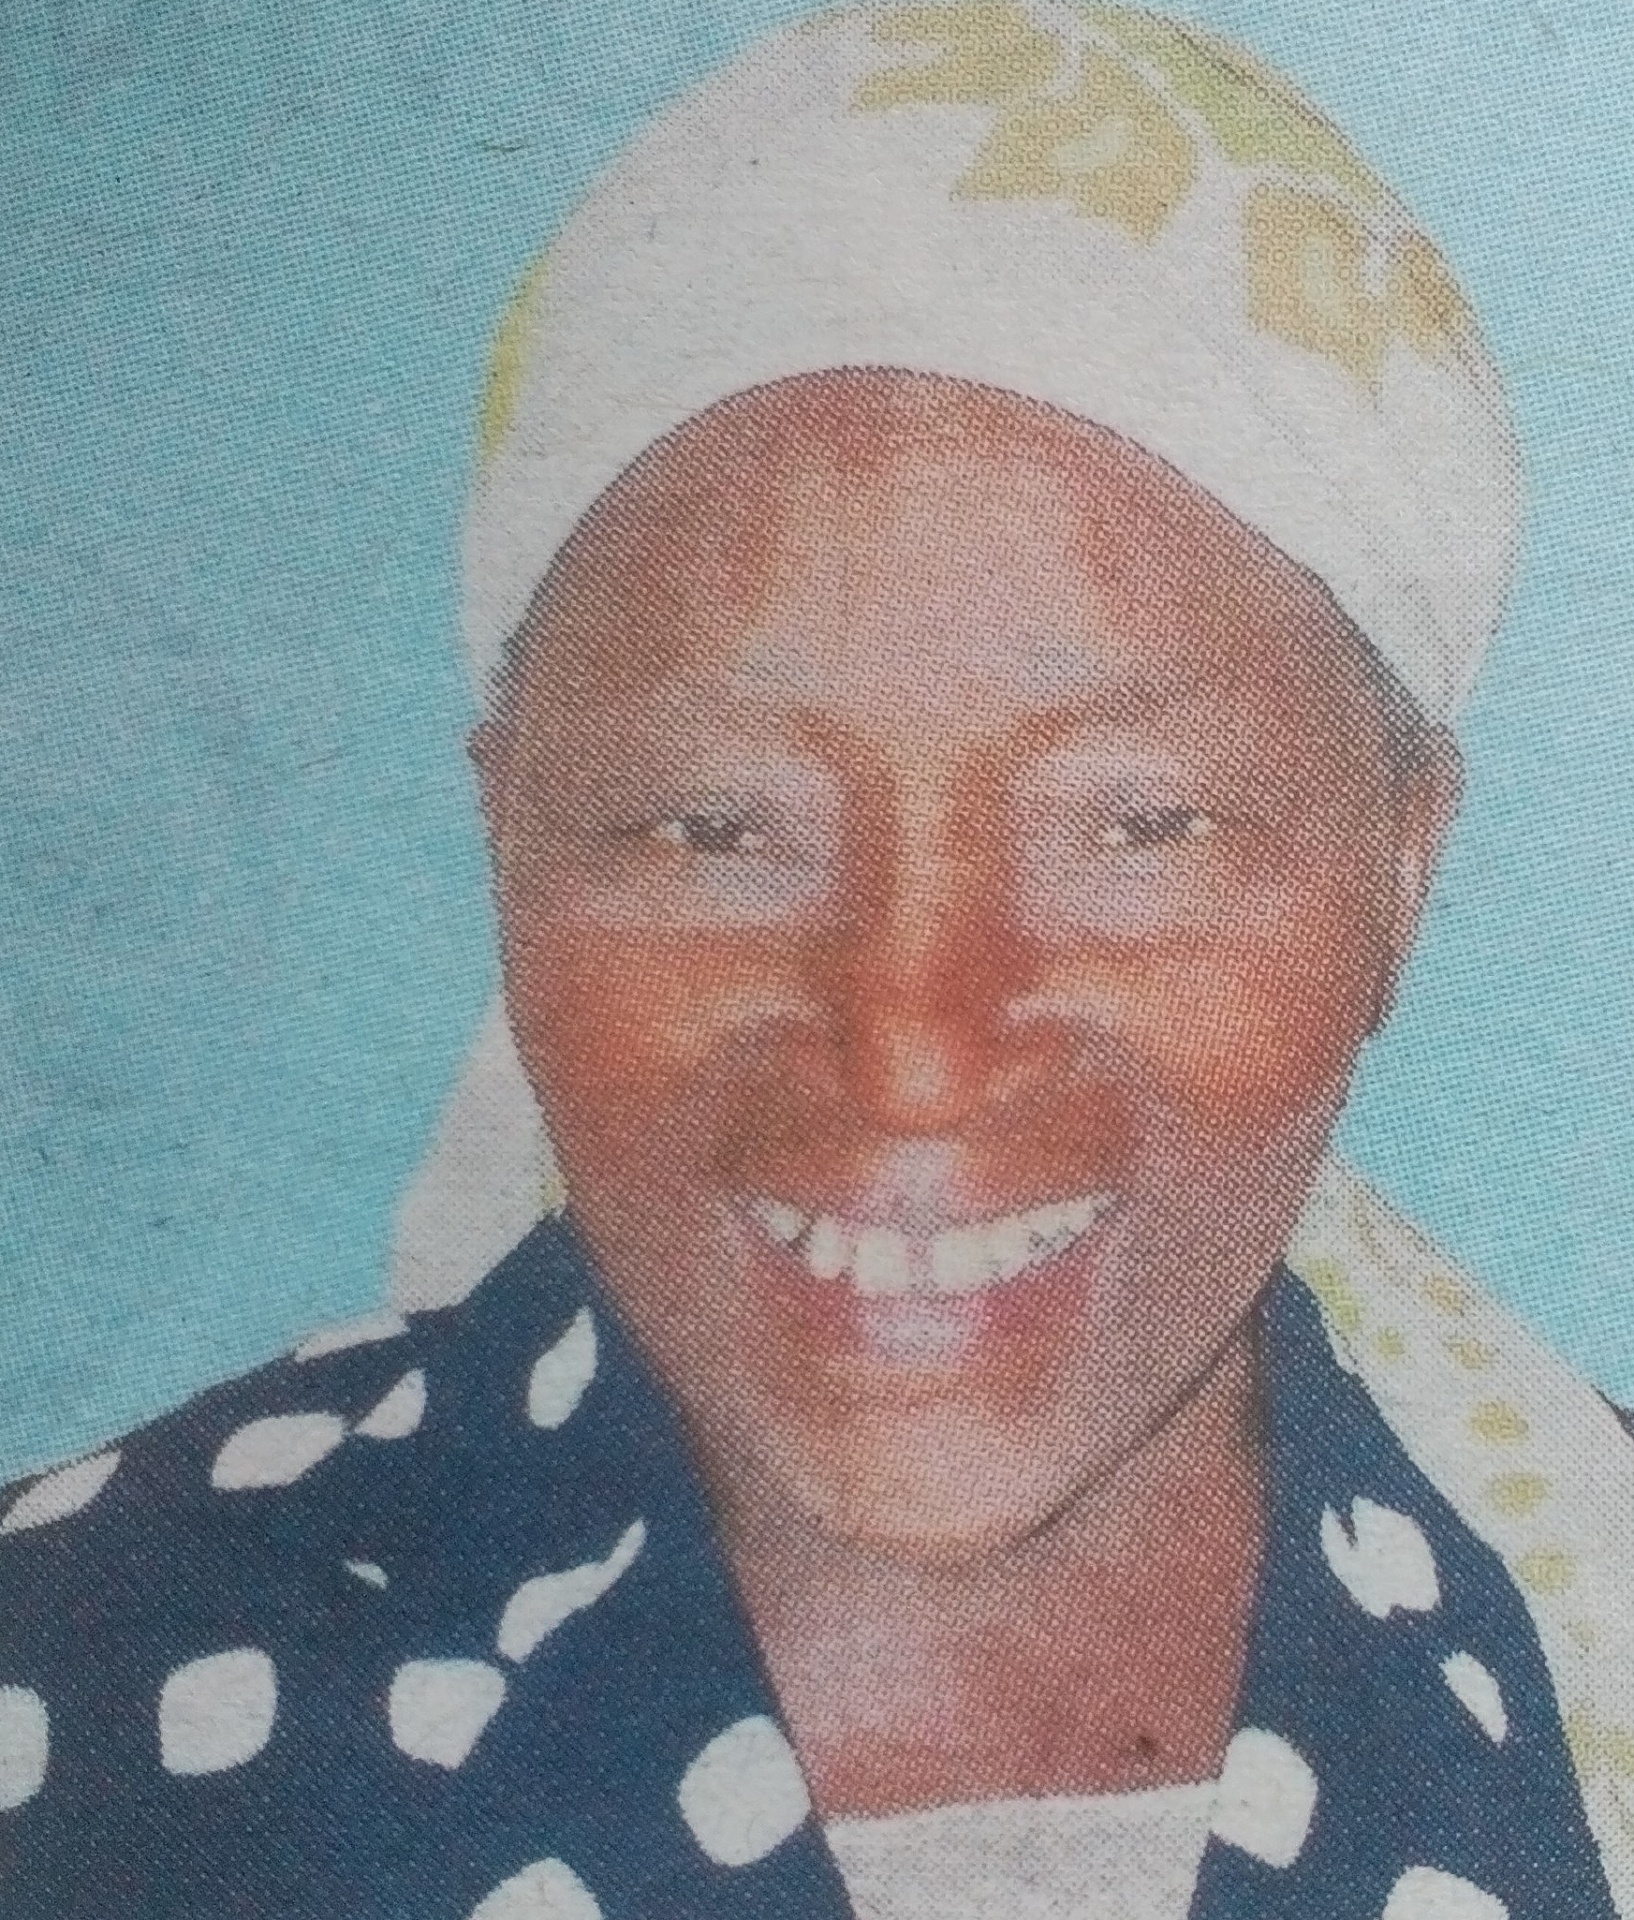 Obituary Image of Cecilia Njoki Kariuki